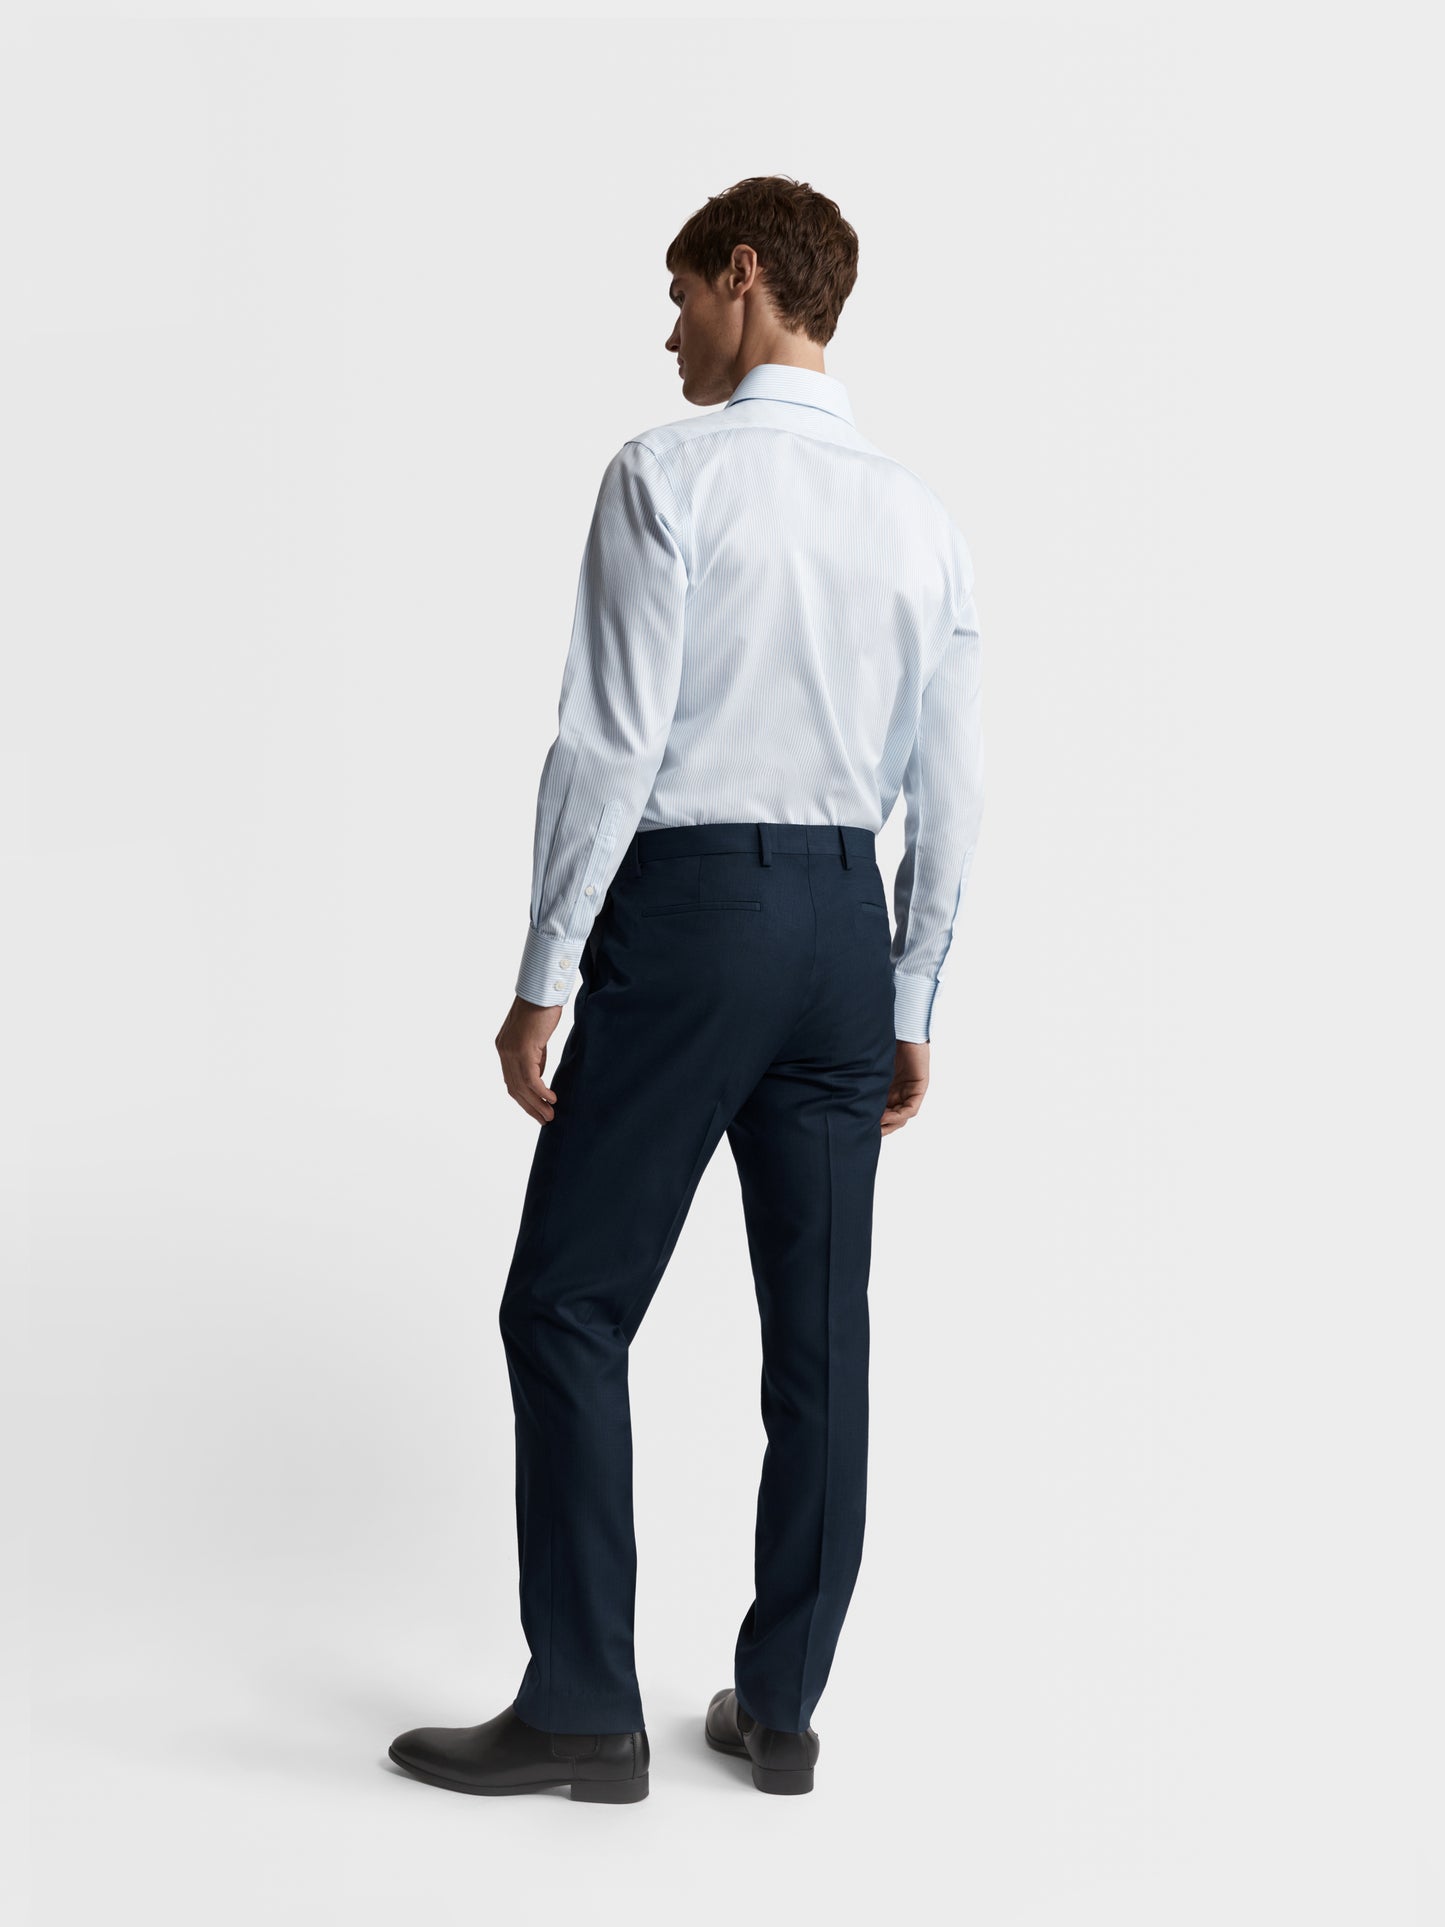 Non-Iron Light Blue Bengal Stripe Twill Slim Fit Single Cuff Semi Cutaway Collar Shirt